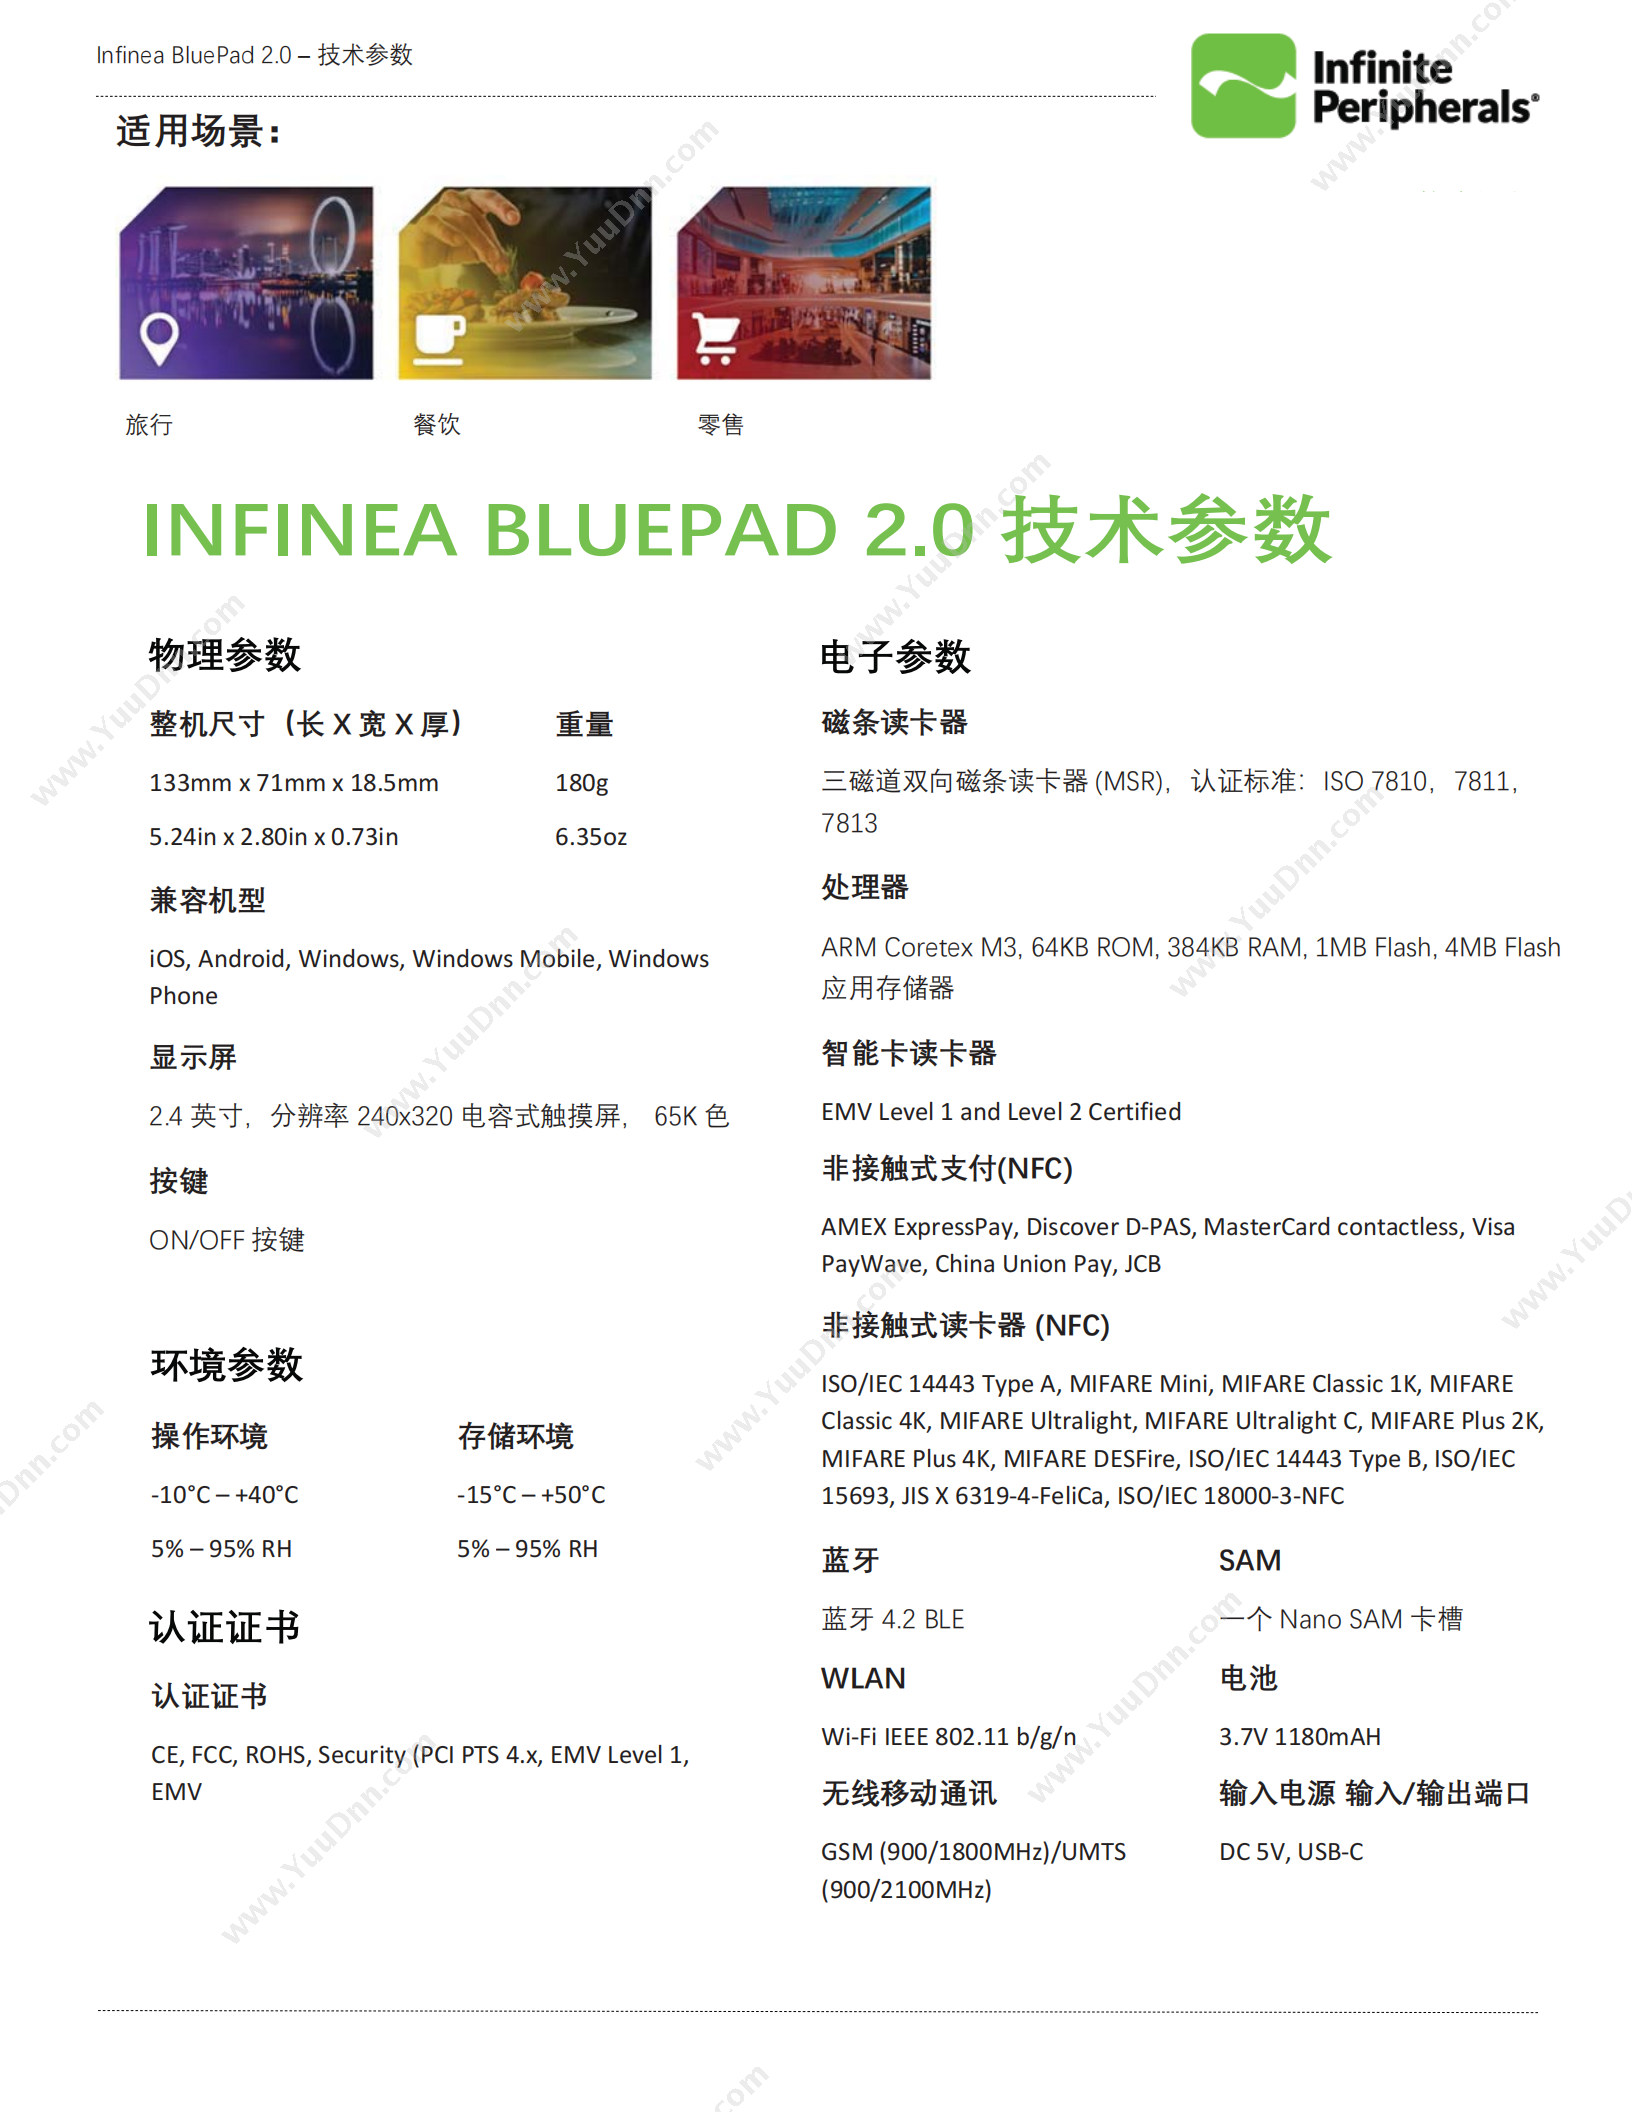 Infinea BluePad 2.0移动支付终端